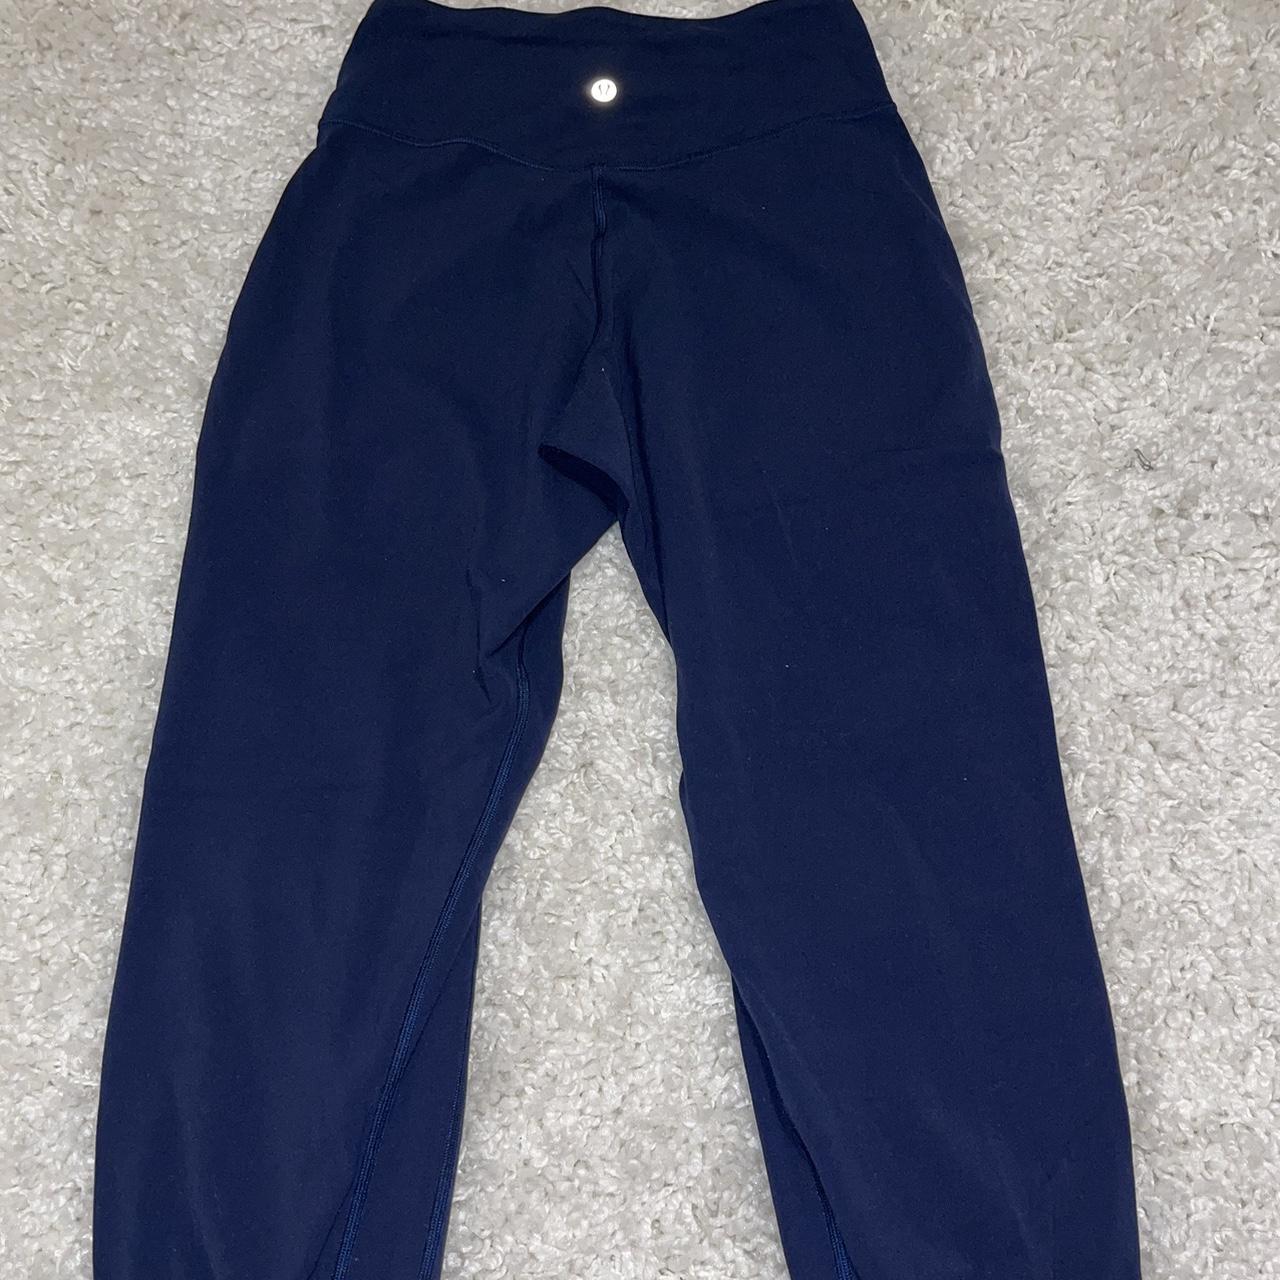 New condition size 4 lululemon navy cropped leggings - clothing